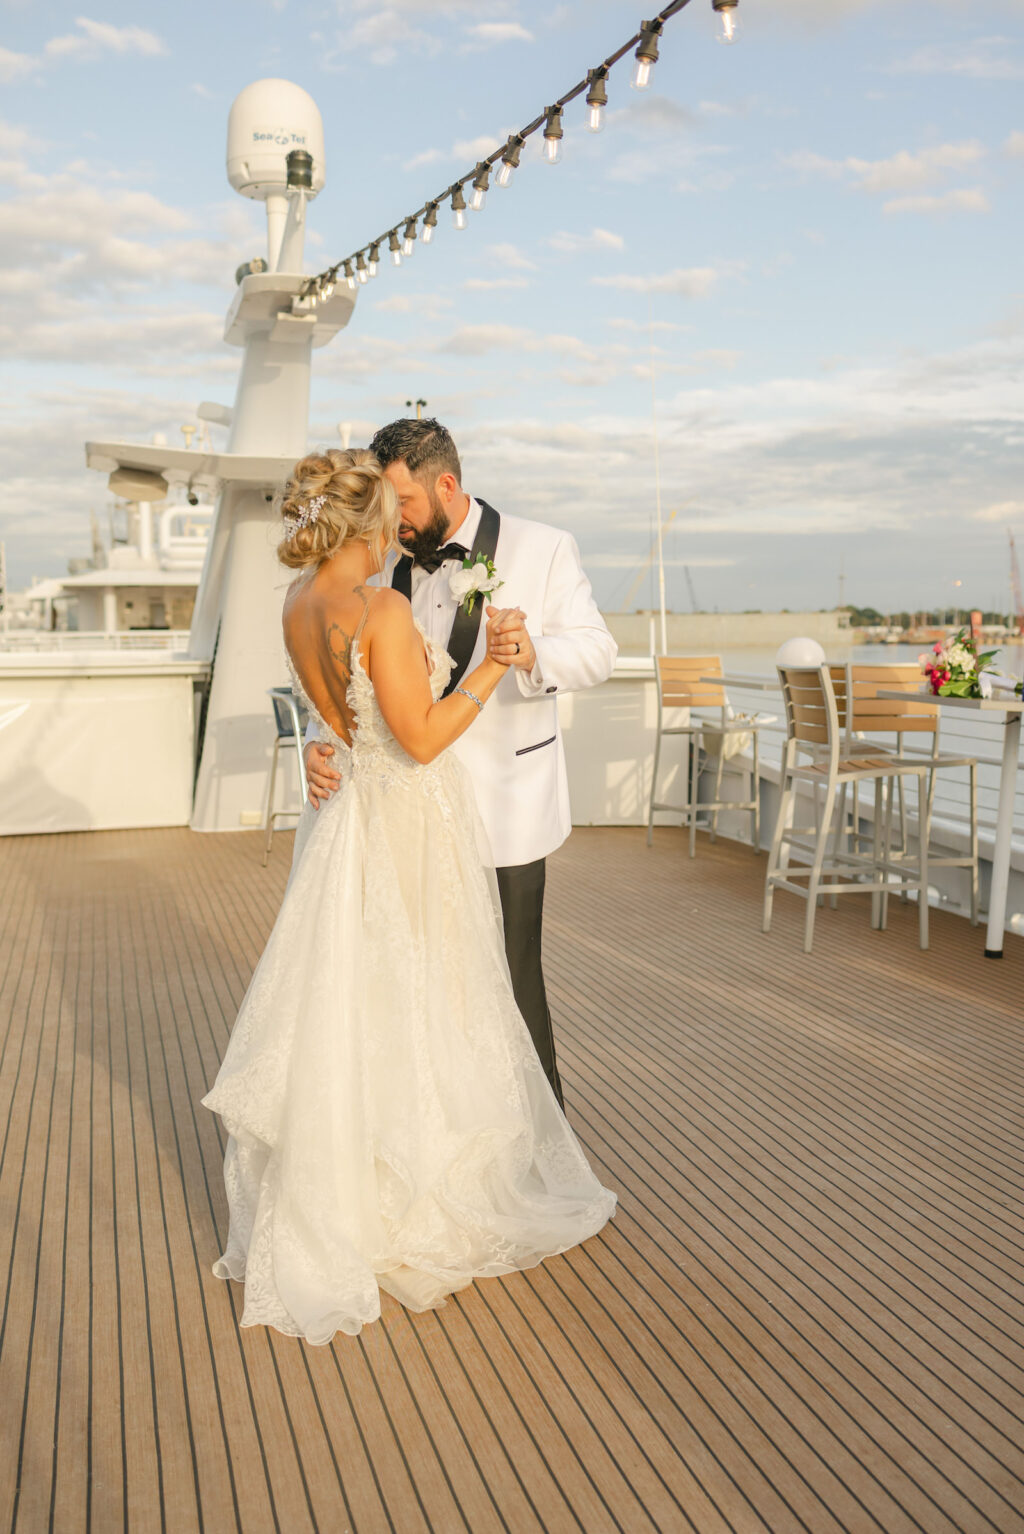 Groom Spinning Bride Sunset Wedding Photo | Tampa Bay Wedding Venue Yacht StarShip